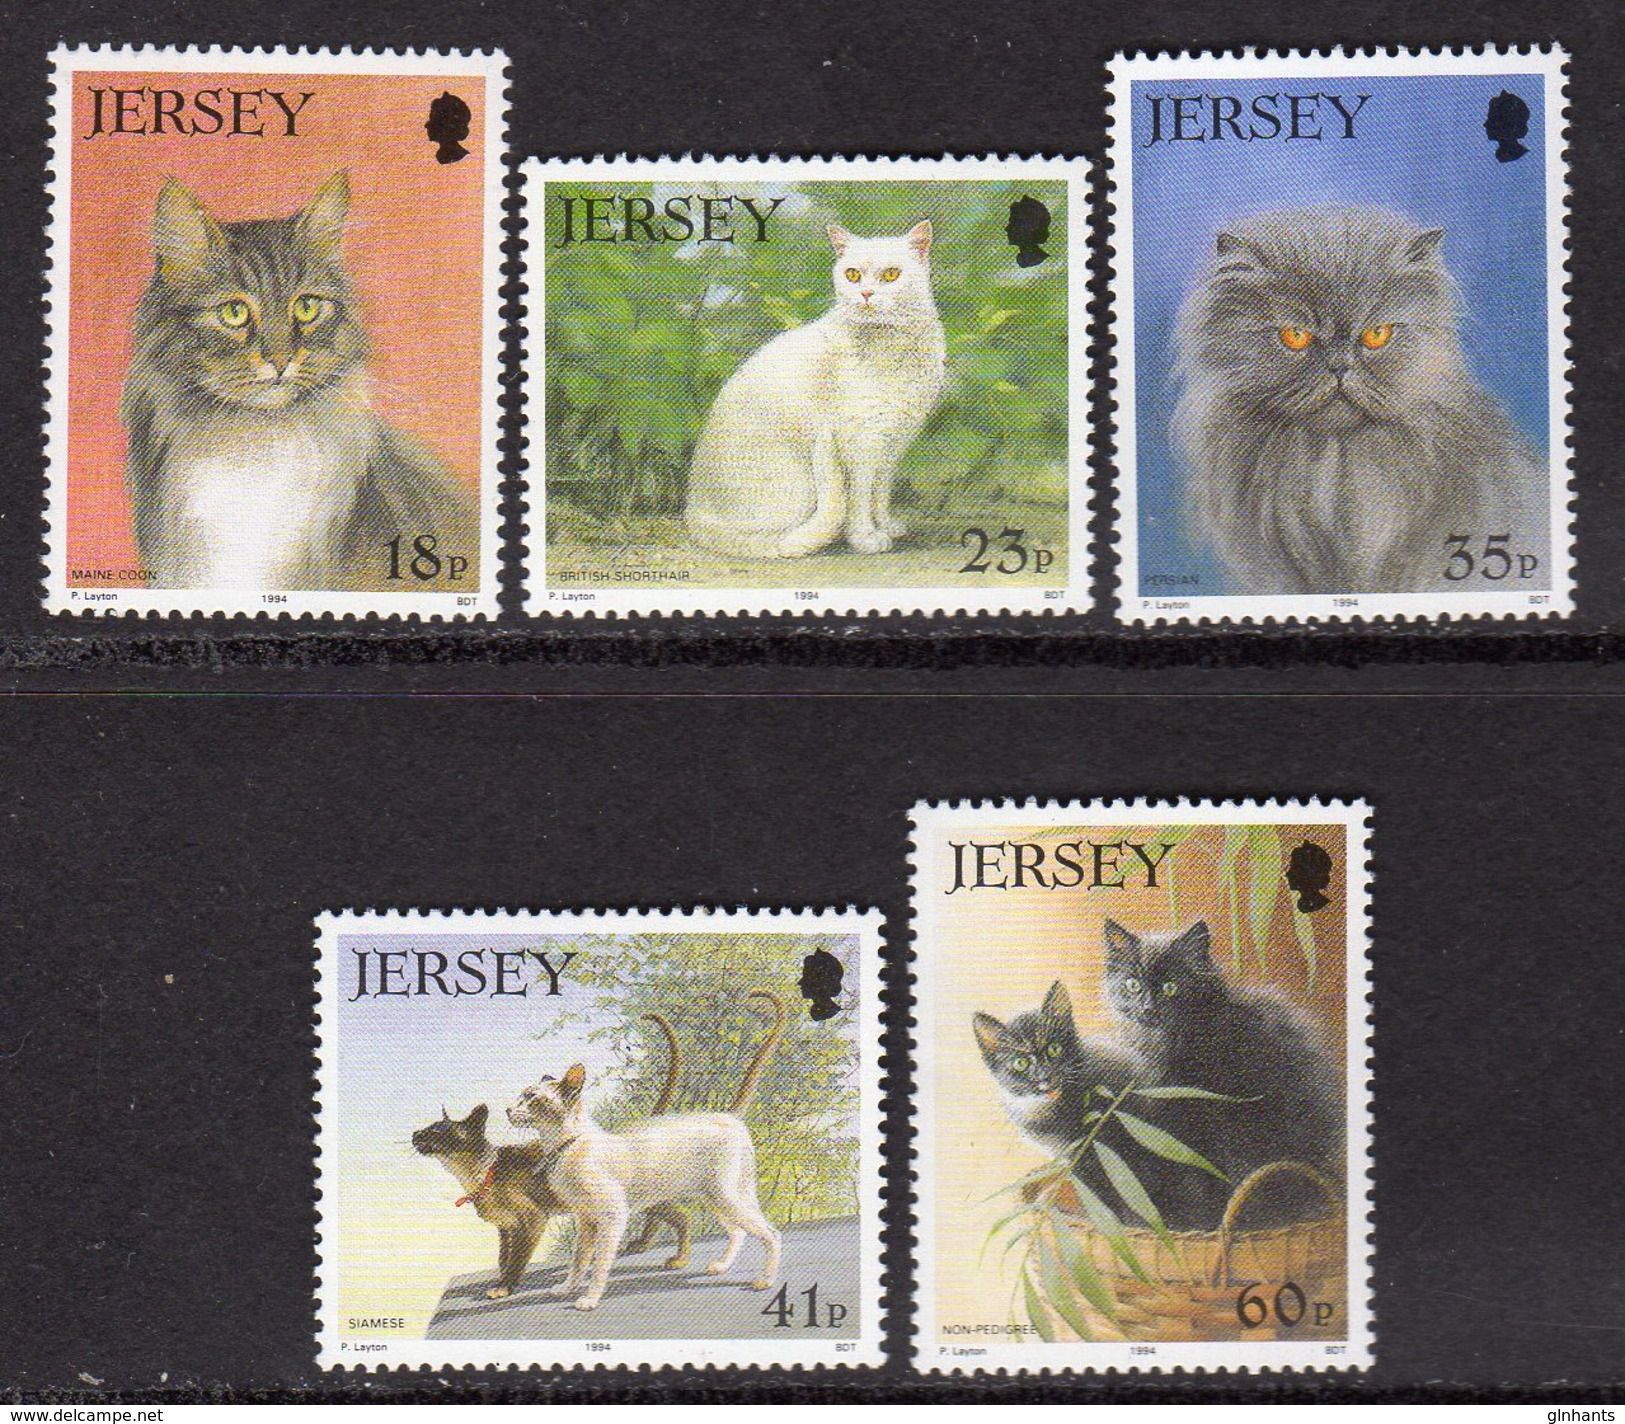 GB JERSEY - 1994 CAT CLUB SET (5V) SG 644-648 FINE MNH ** - Jersey